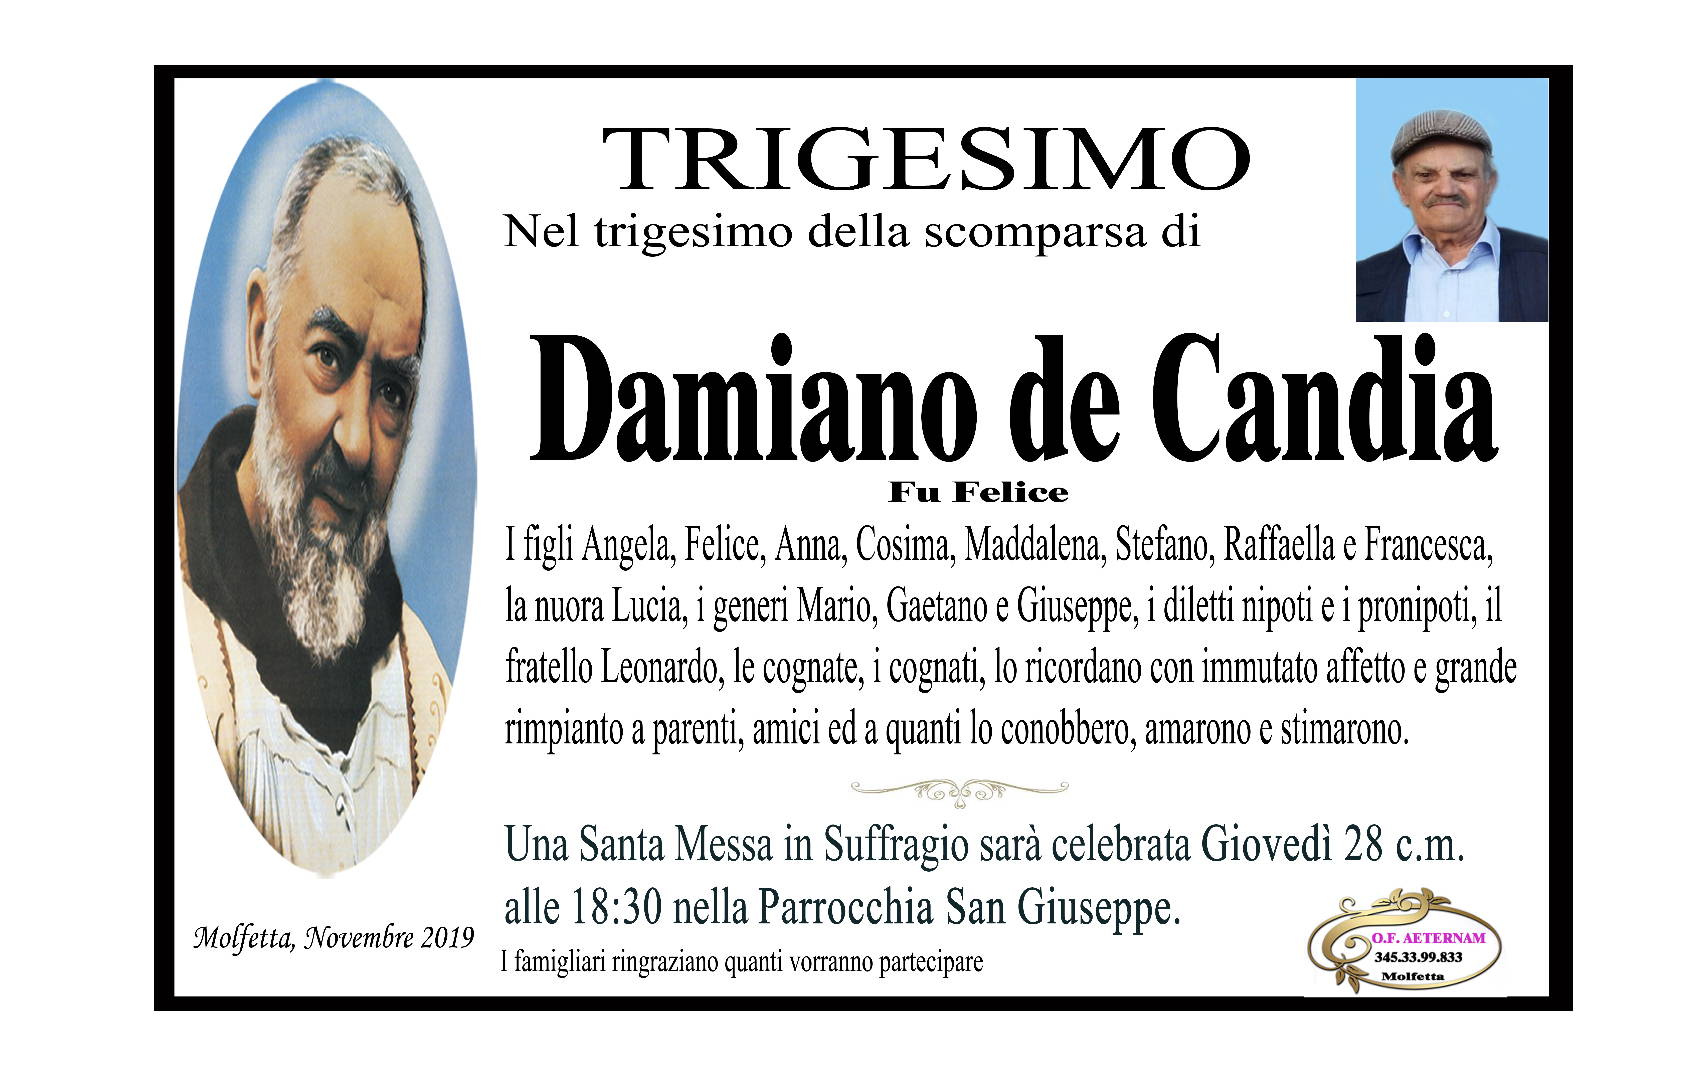 Damiano de Candia